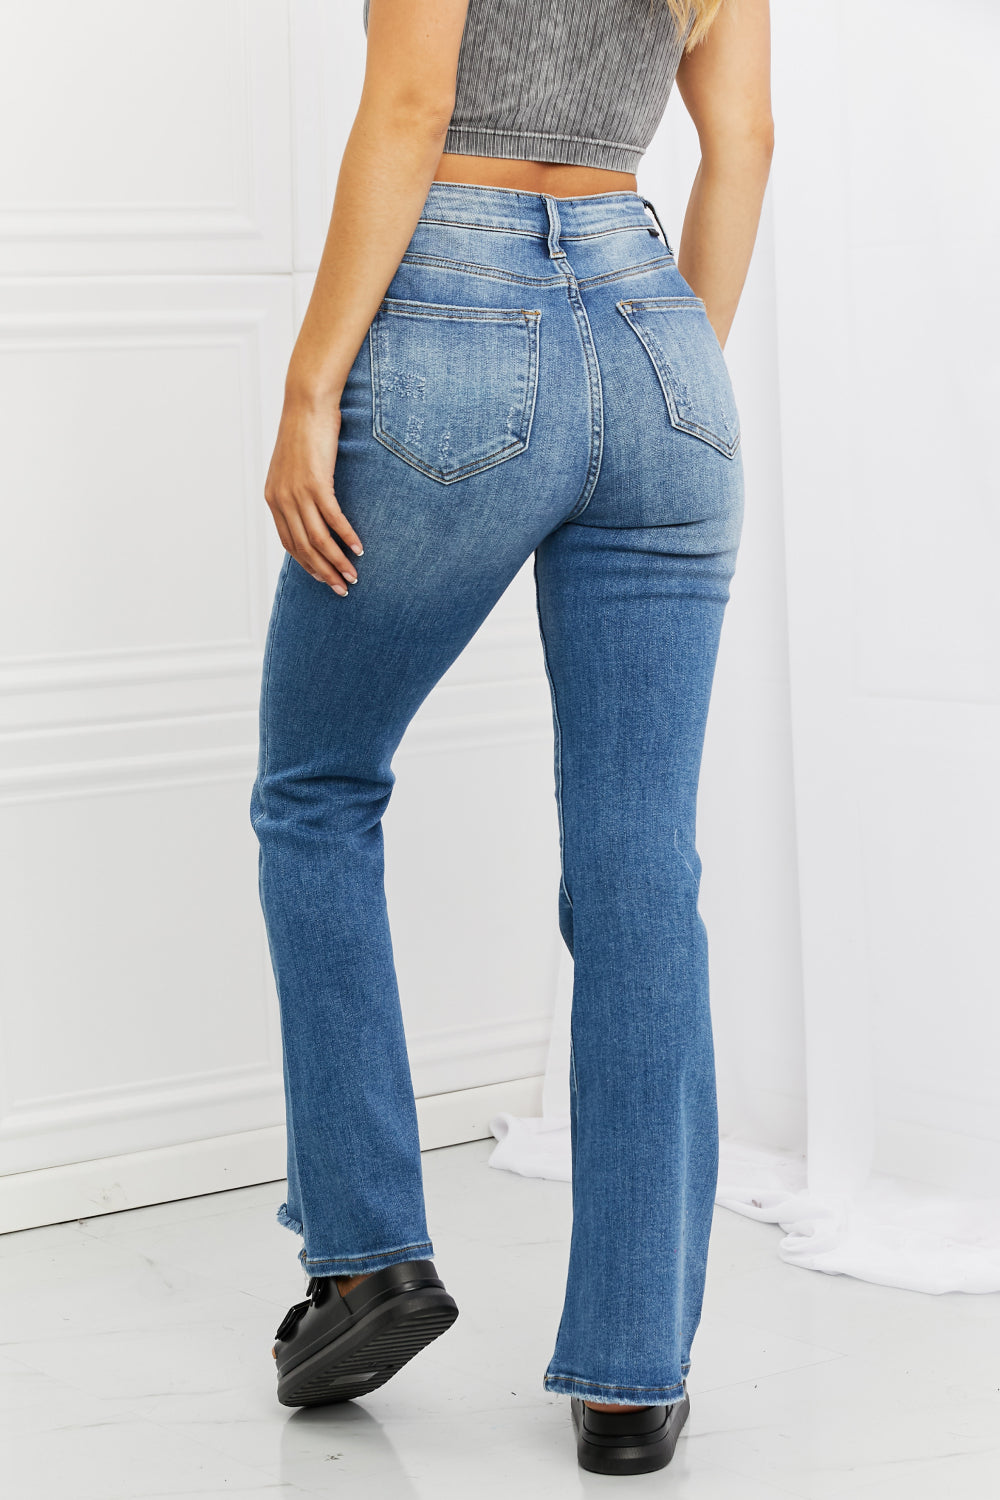 Iris Jeans